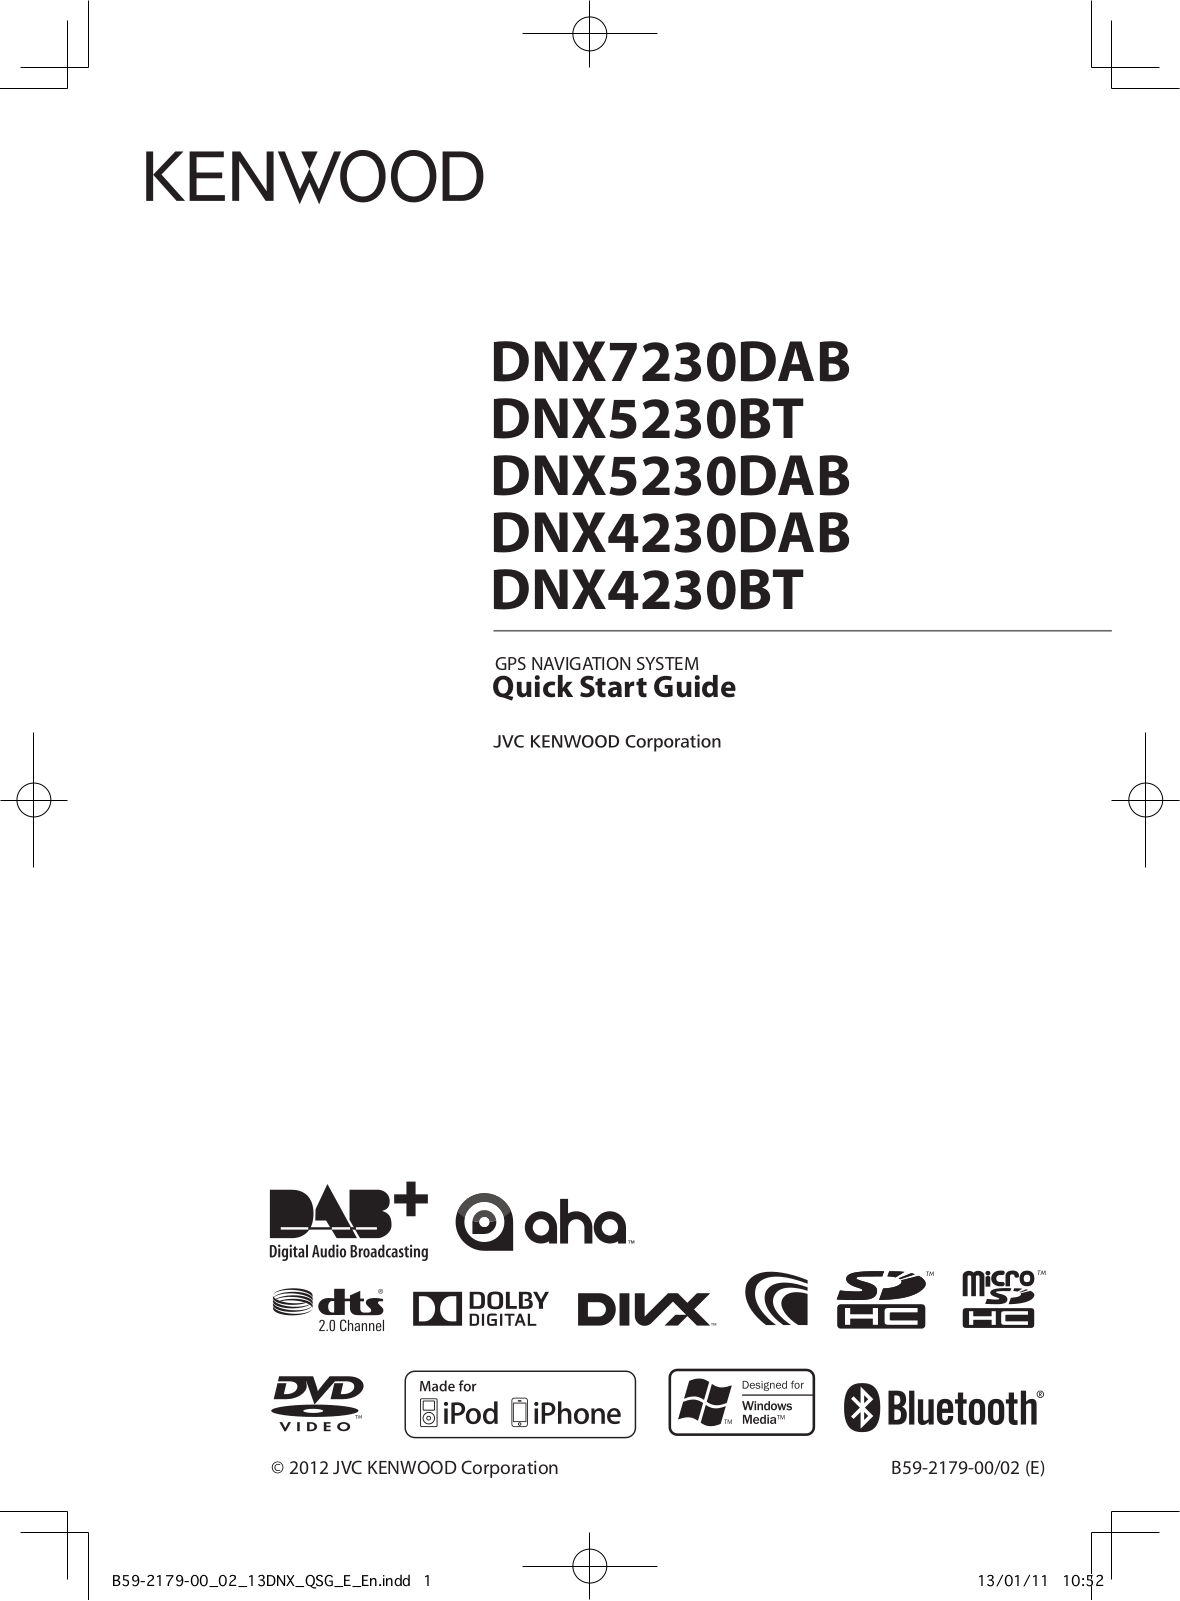 Kenwood DNX7230DAB User Manual